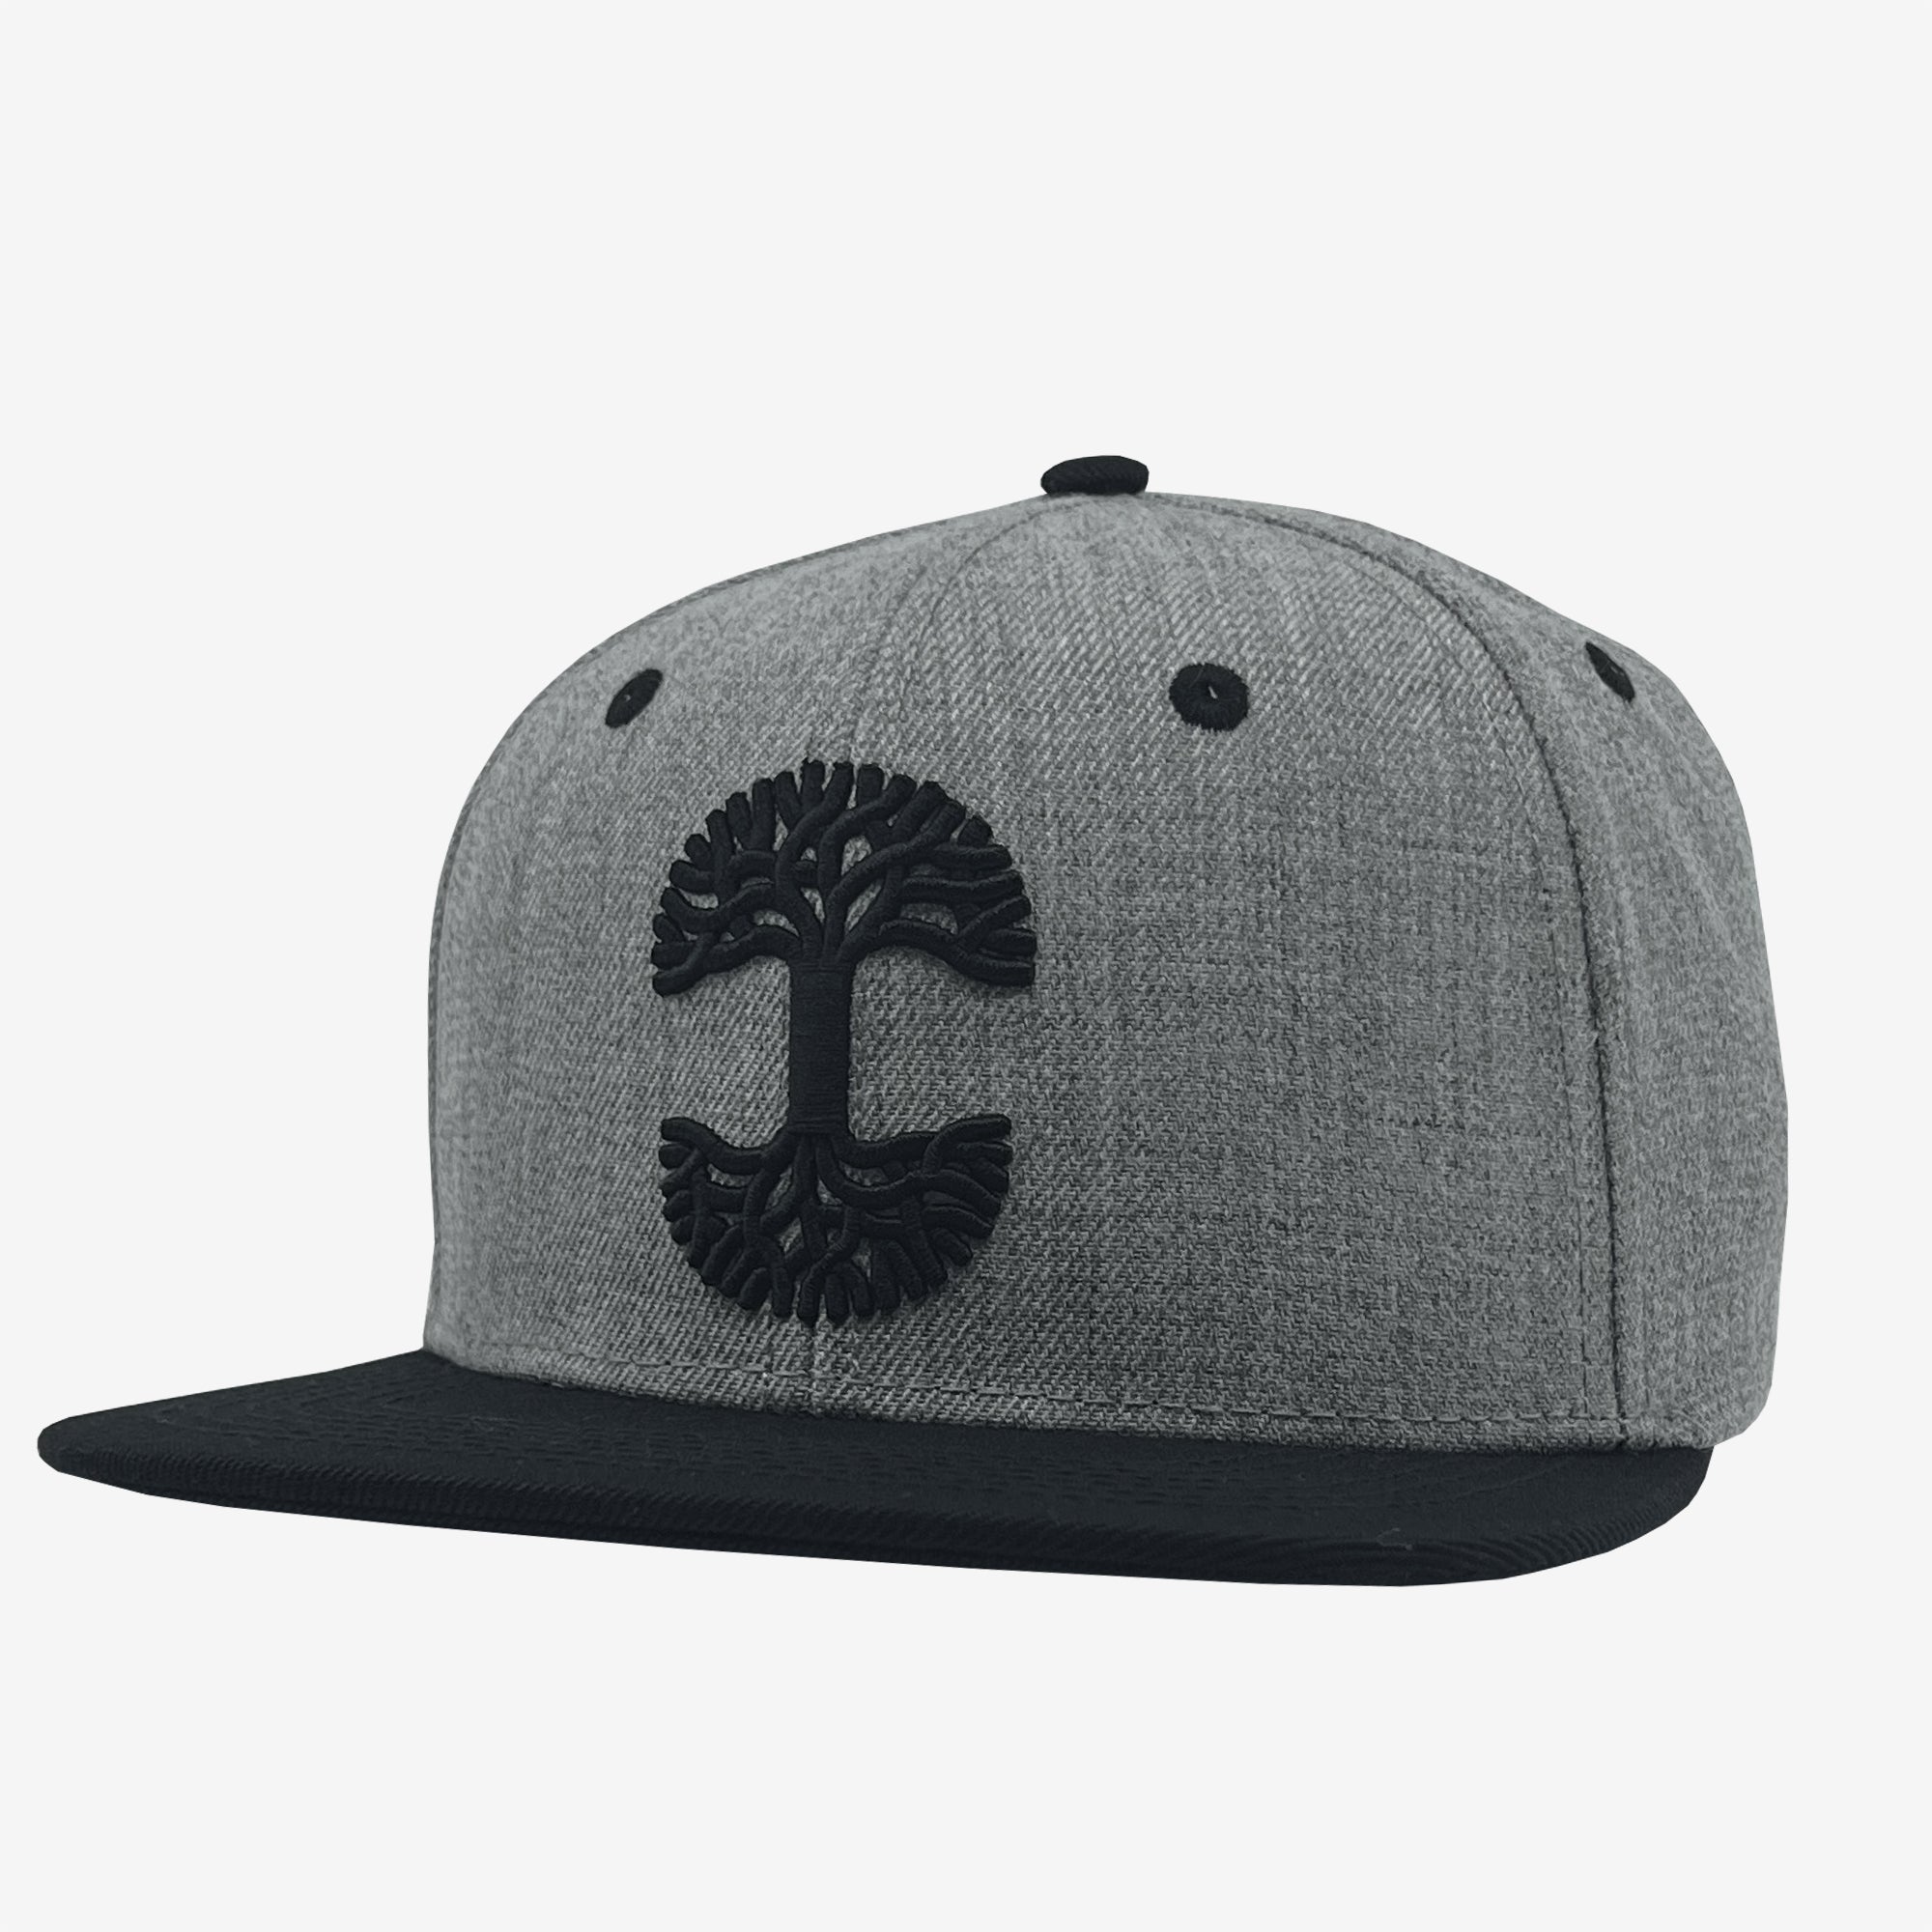 Zip Hoodie - Oaklandish Logo Applique, Grey with Olive Logo XX-Large / Carbon/Olive